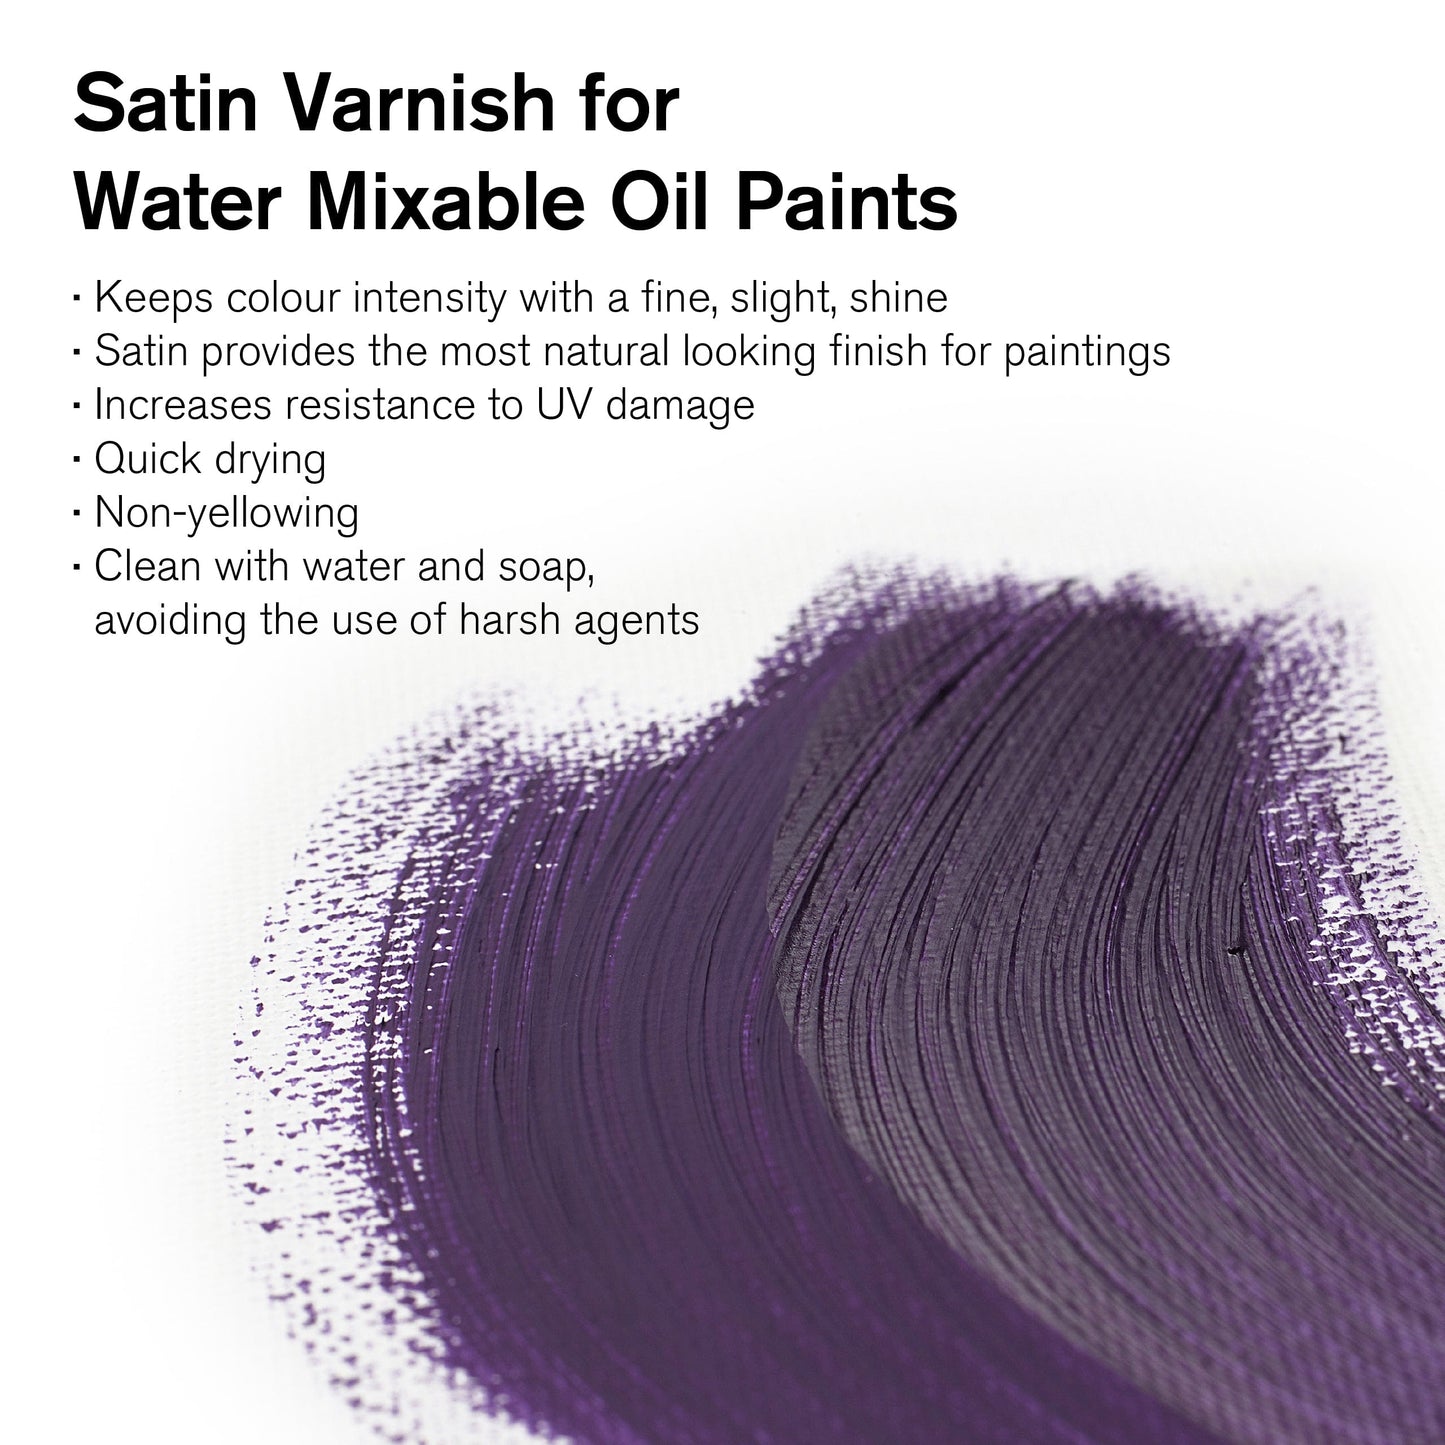 Winsor & Newton Water Mixable Oil Medium Winsor & Newton - Artistan - Satin Varnish - 75mL Bottle - Item #3221727